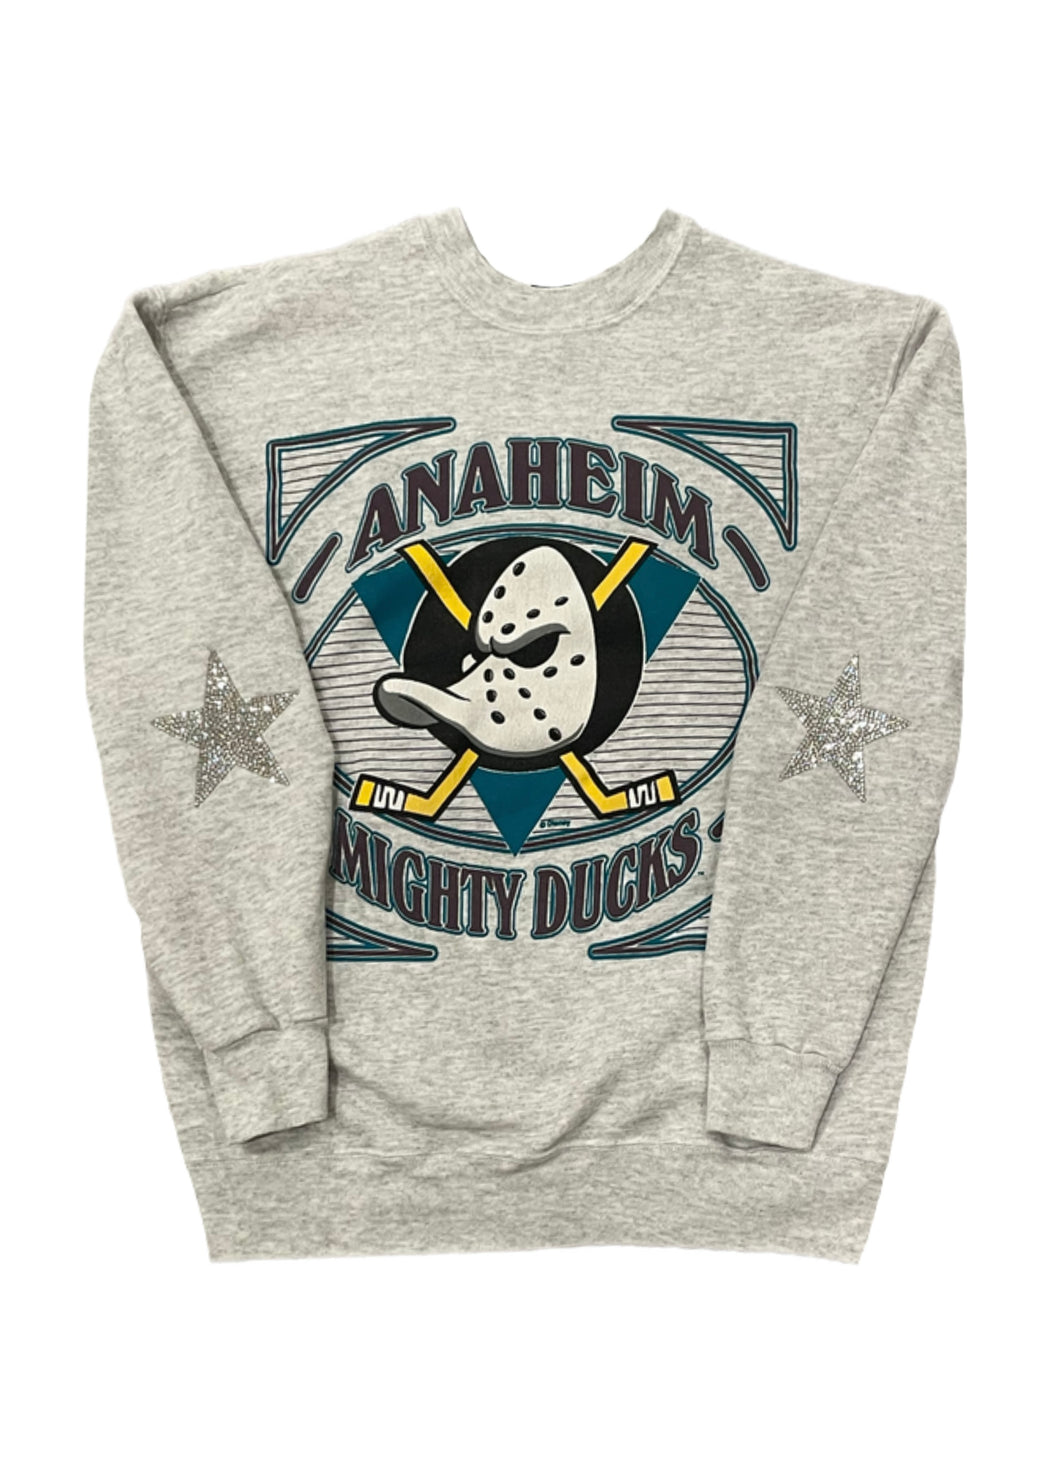 Anaheim Ducks, Hockey One of a KIND Vintage “Mighty Ducks” Rare Find Sweatshirt with Crystal Star Design